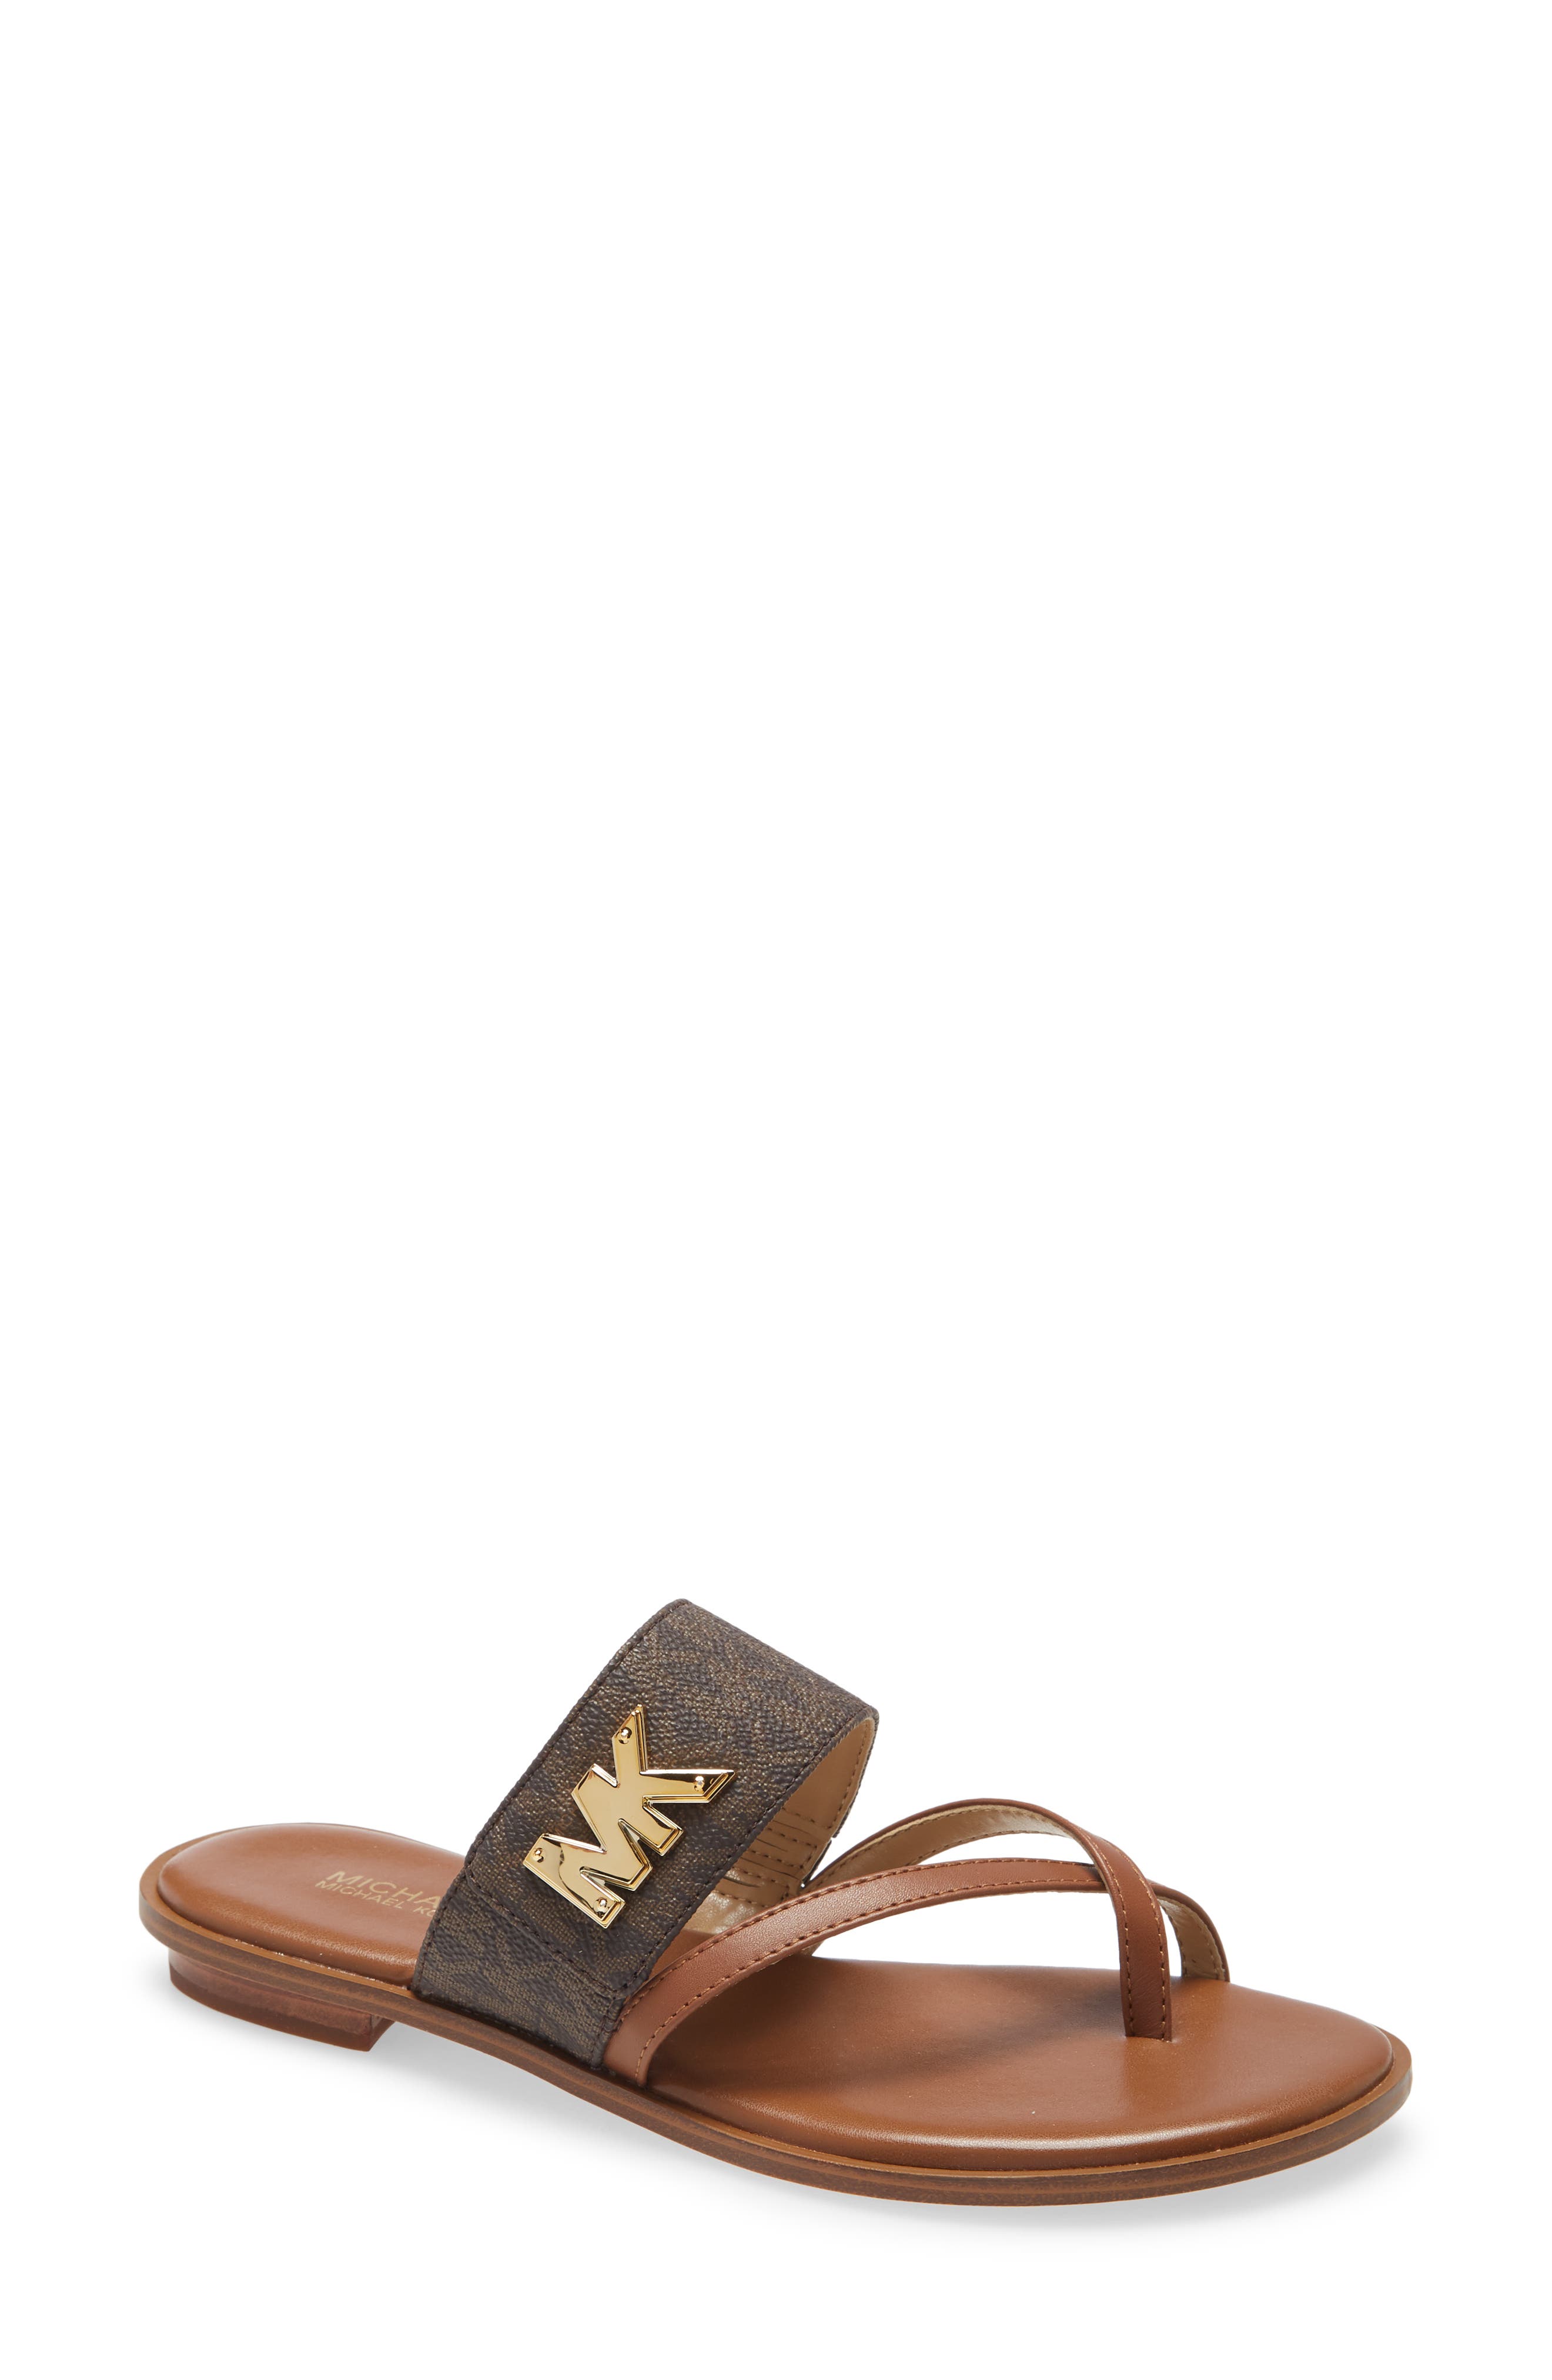 mk sandals price